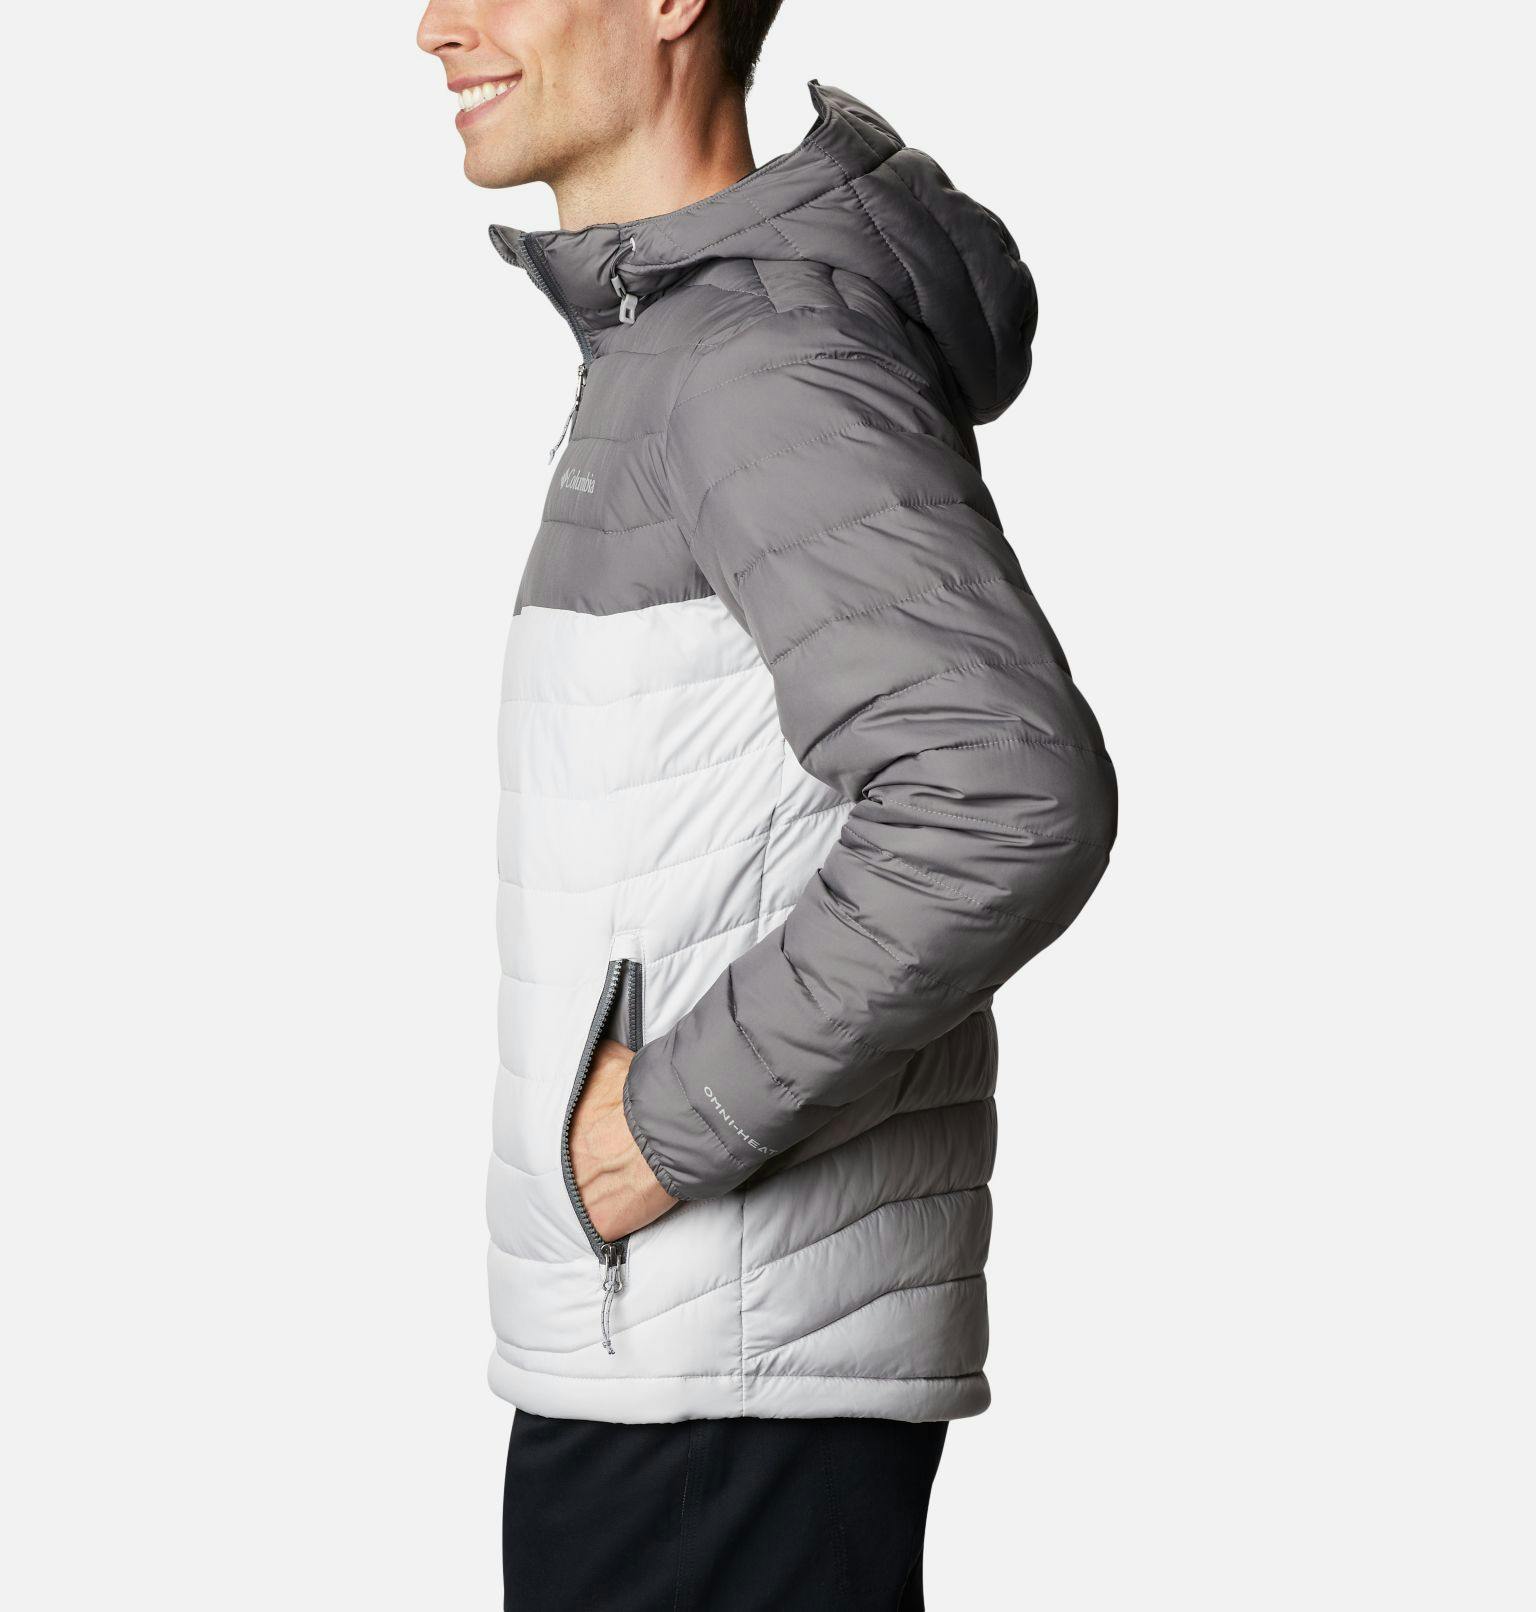 Men's Slope Edge™ Hooded Insulated Jacket